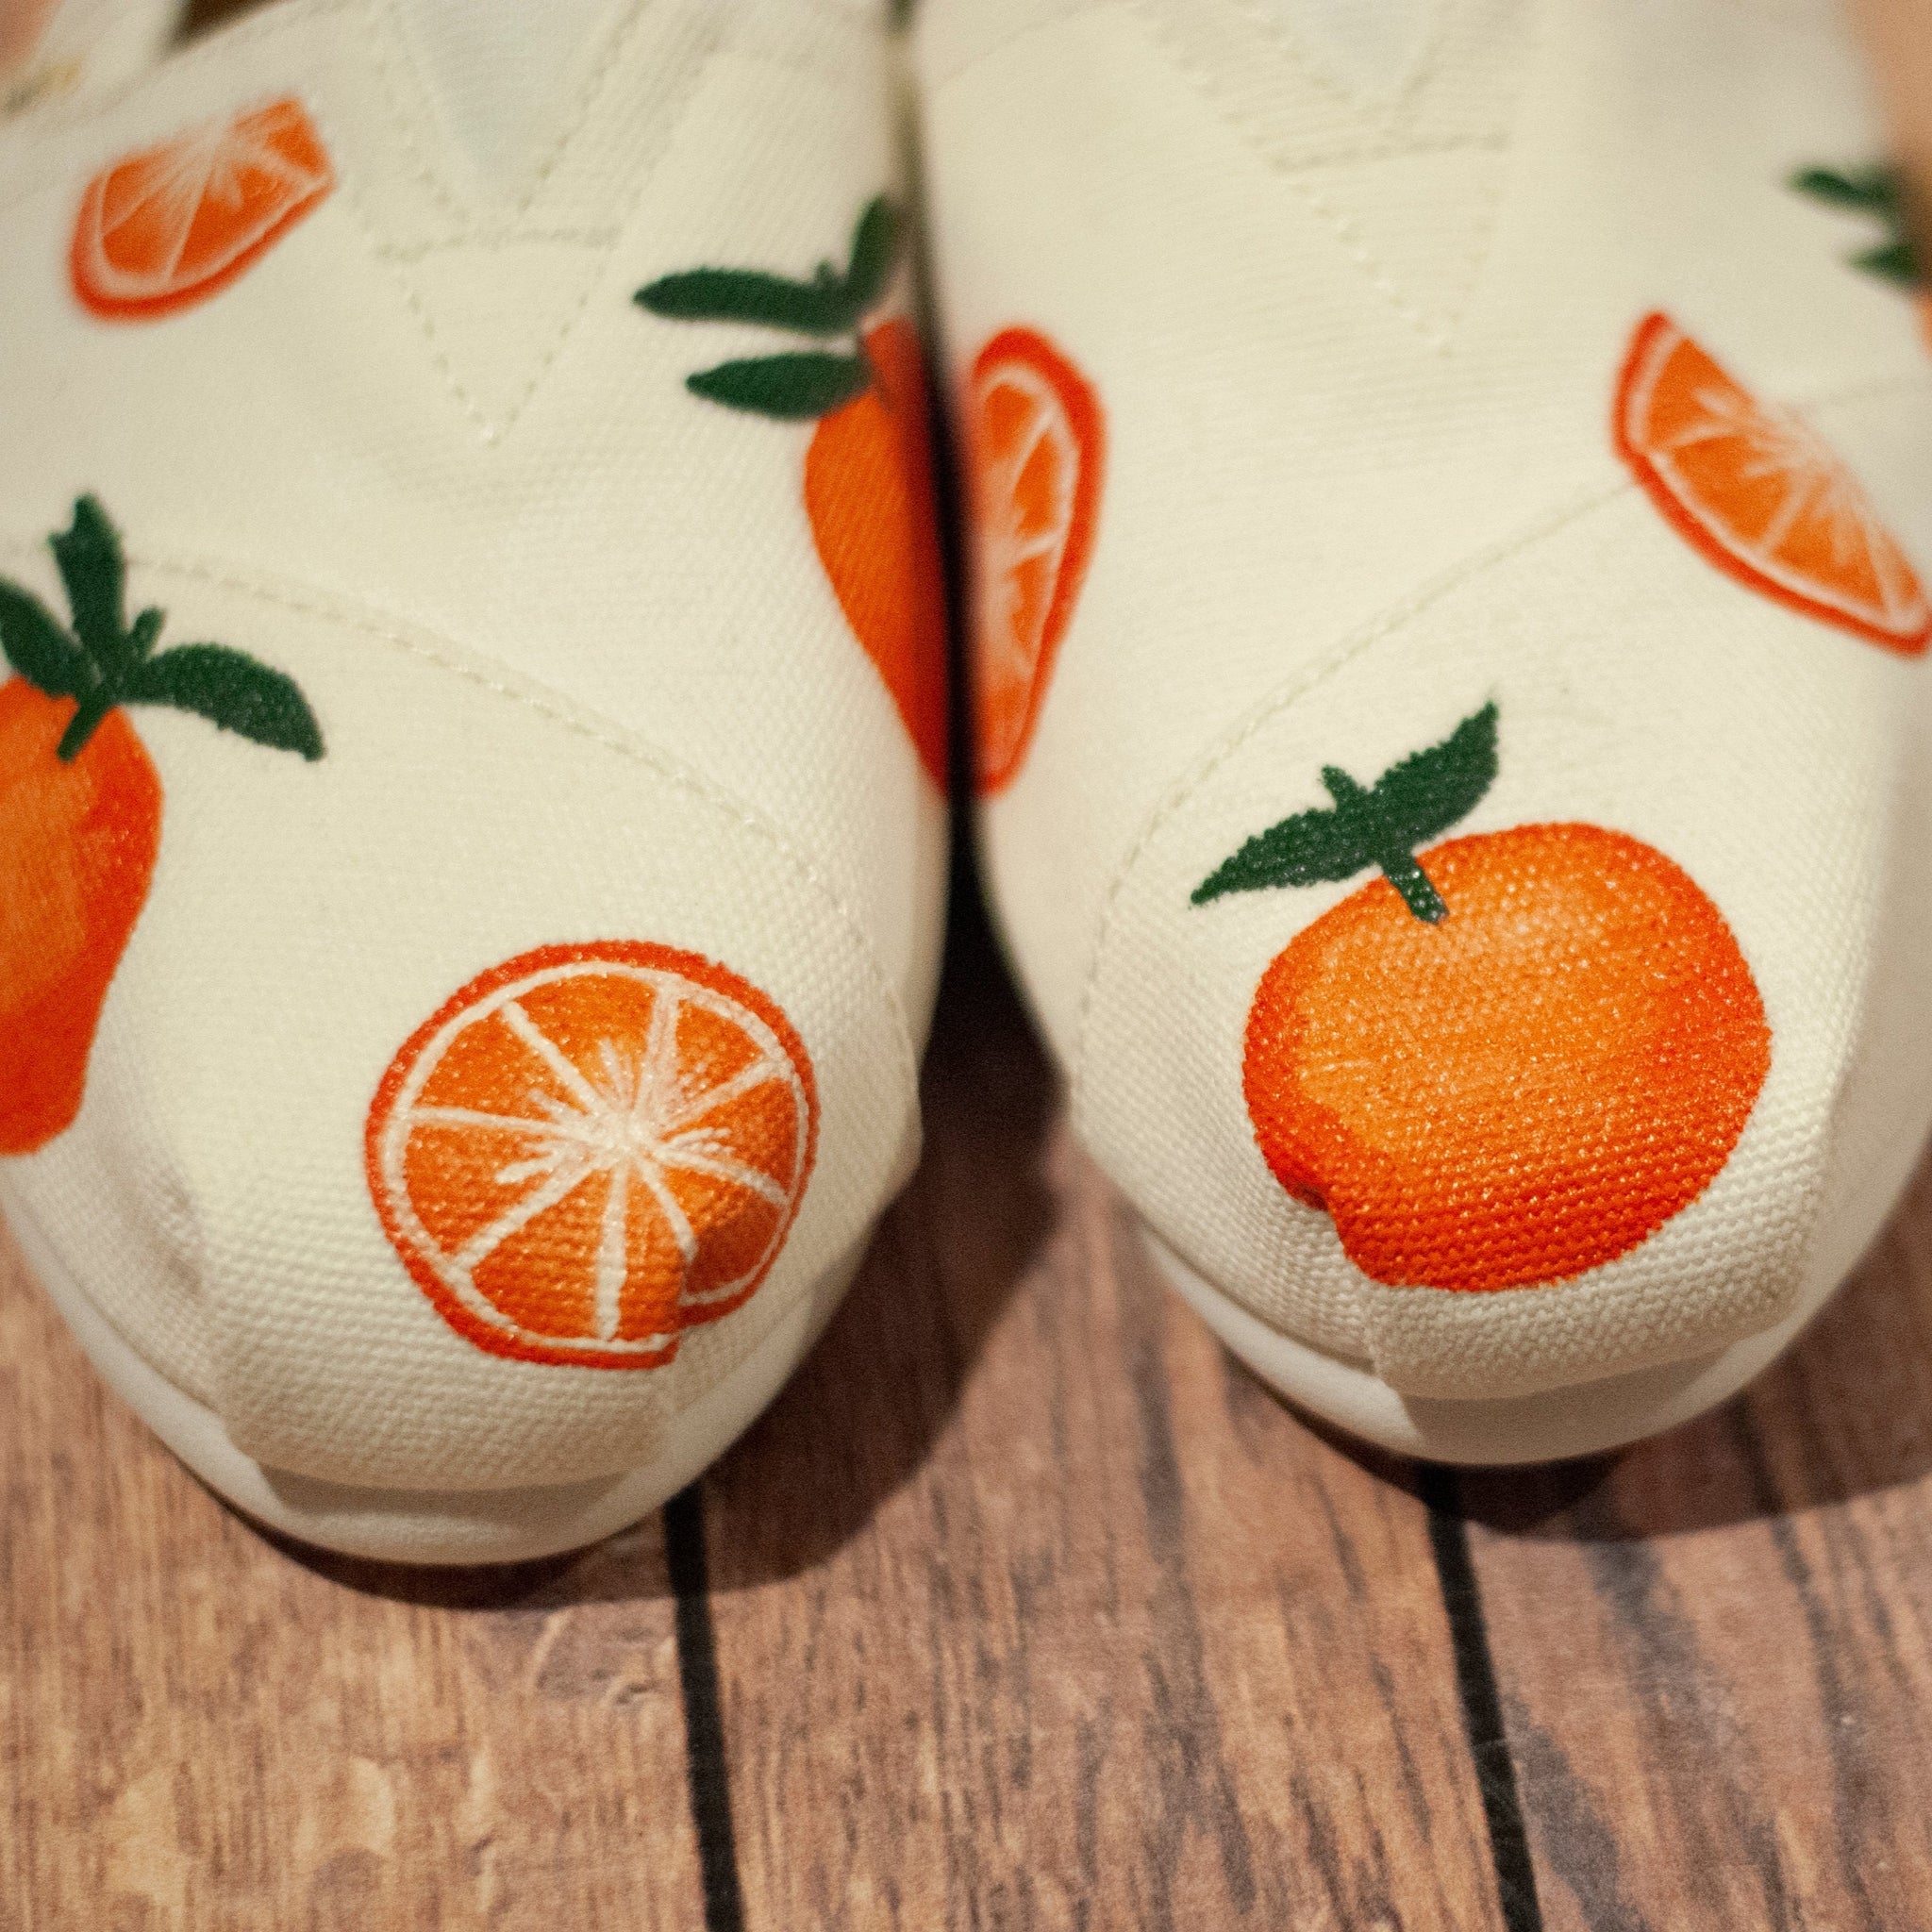 Women's - Size 6.5 - Orange Slice Toms